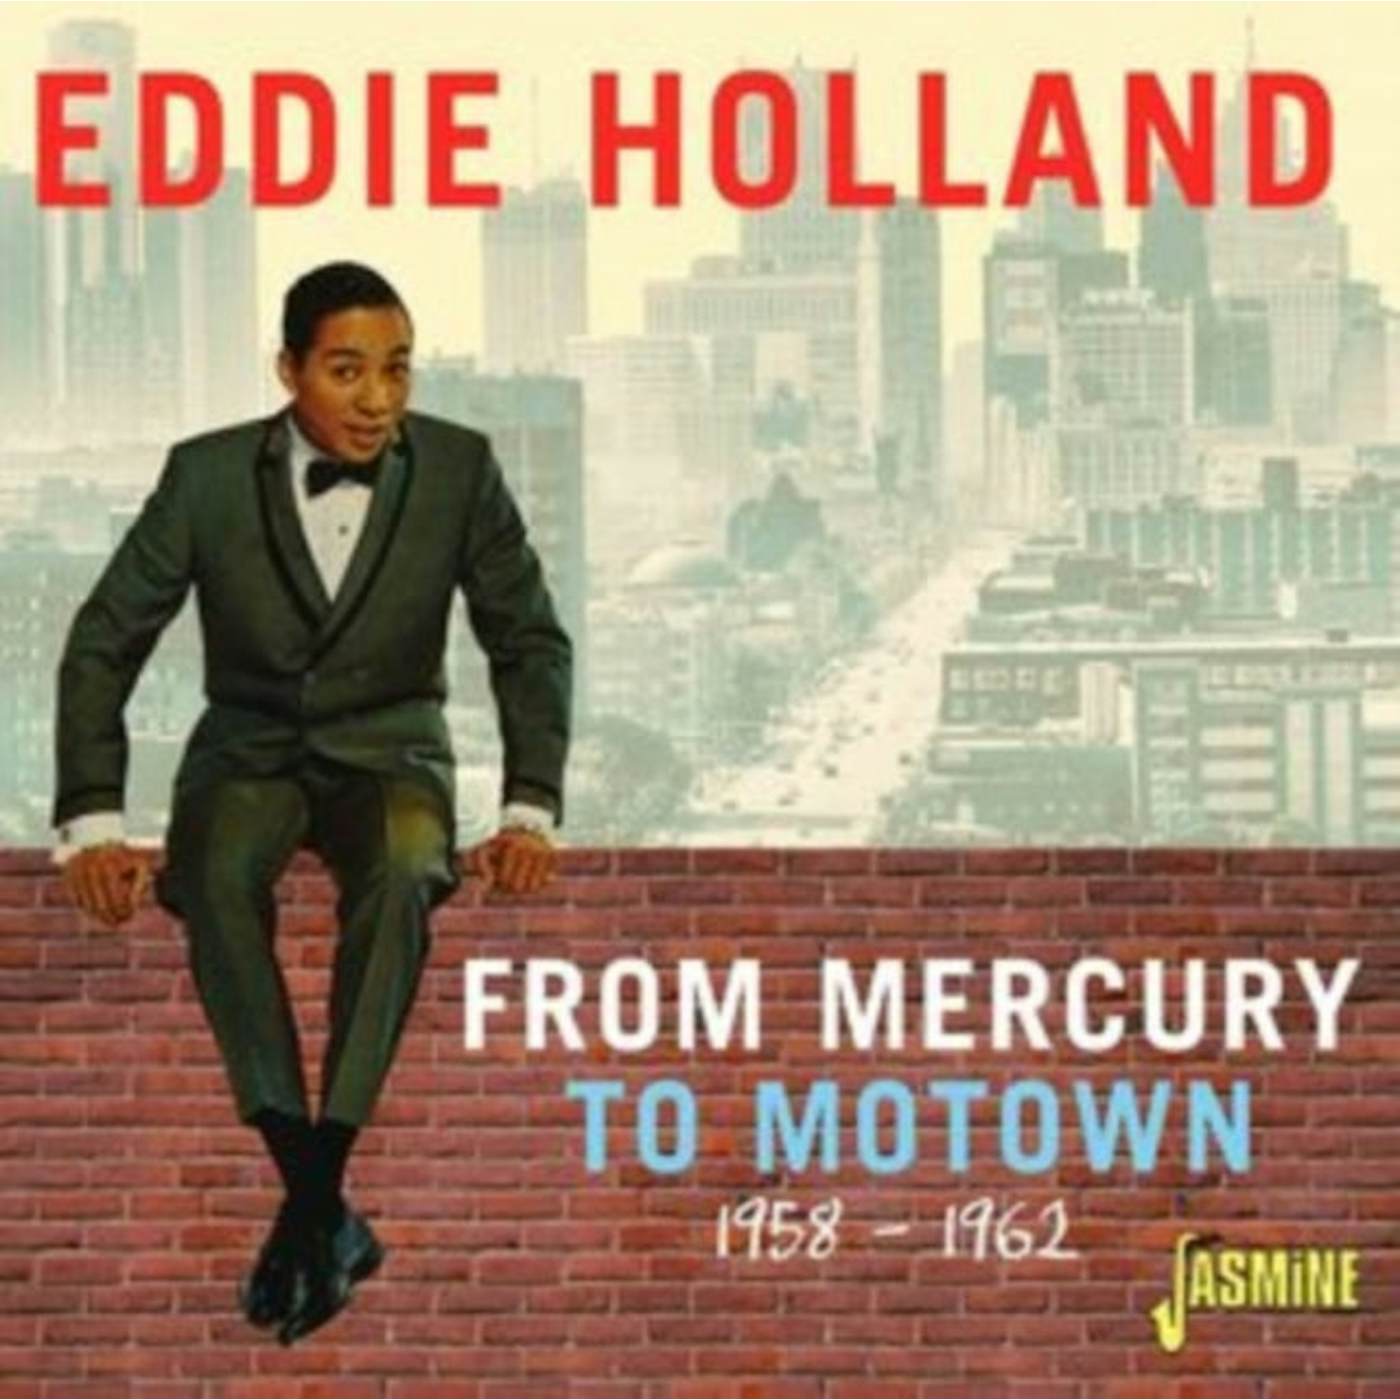 Eddie Holland CD - From Mercury To Motown 19 58-19 62